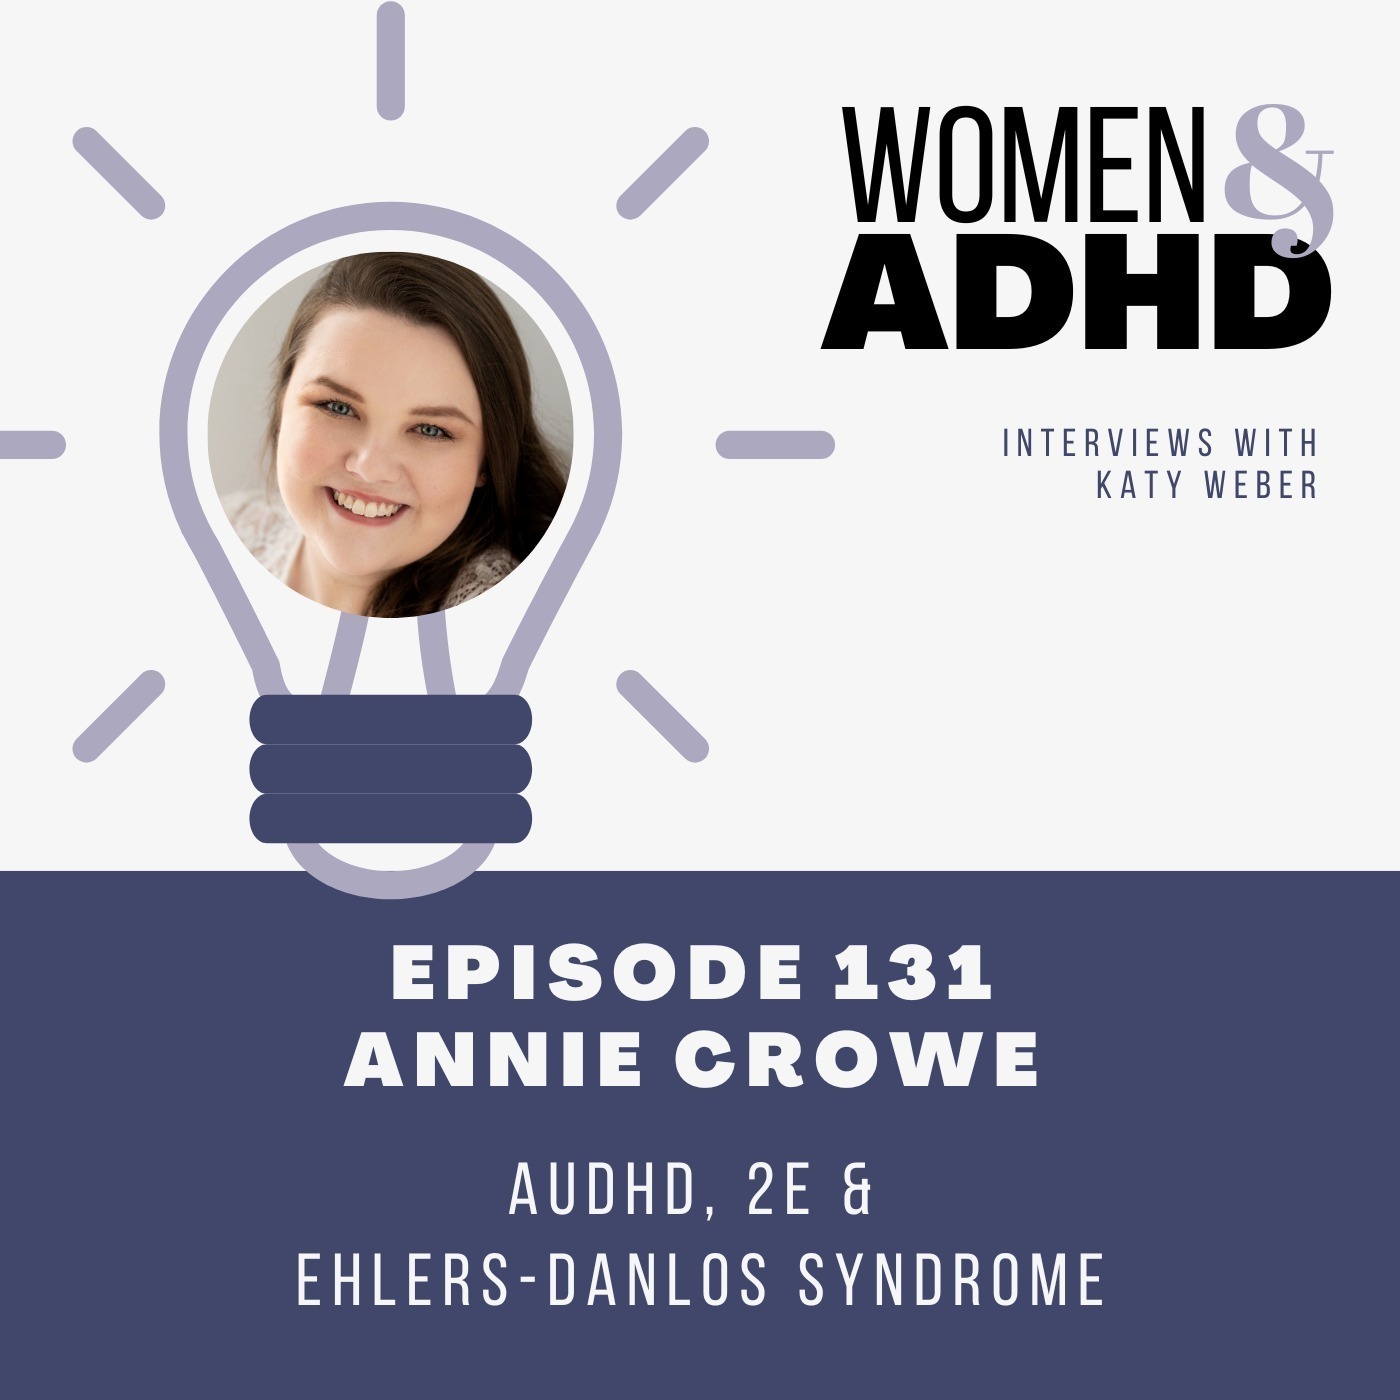 Annie Crowe: AuDHD, 2E & Ehlers-Danlos syndrome